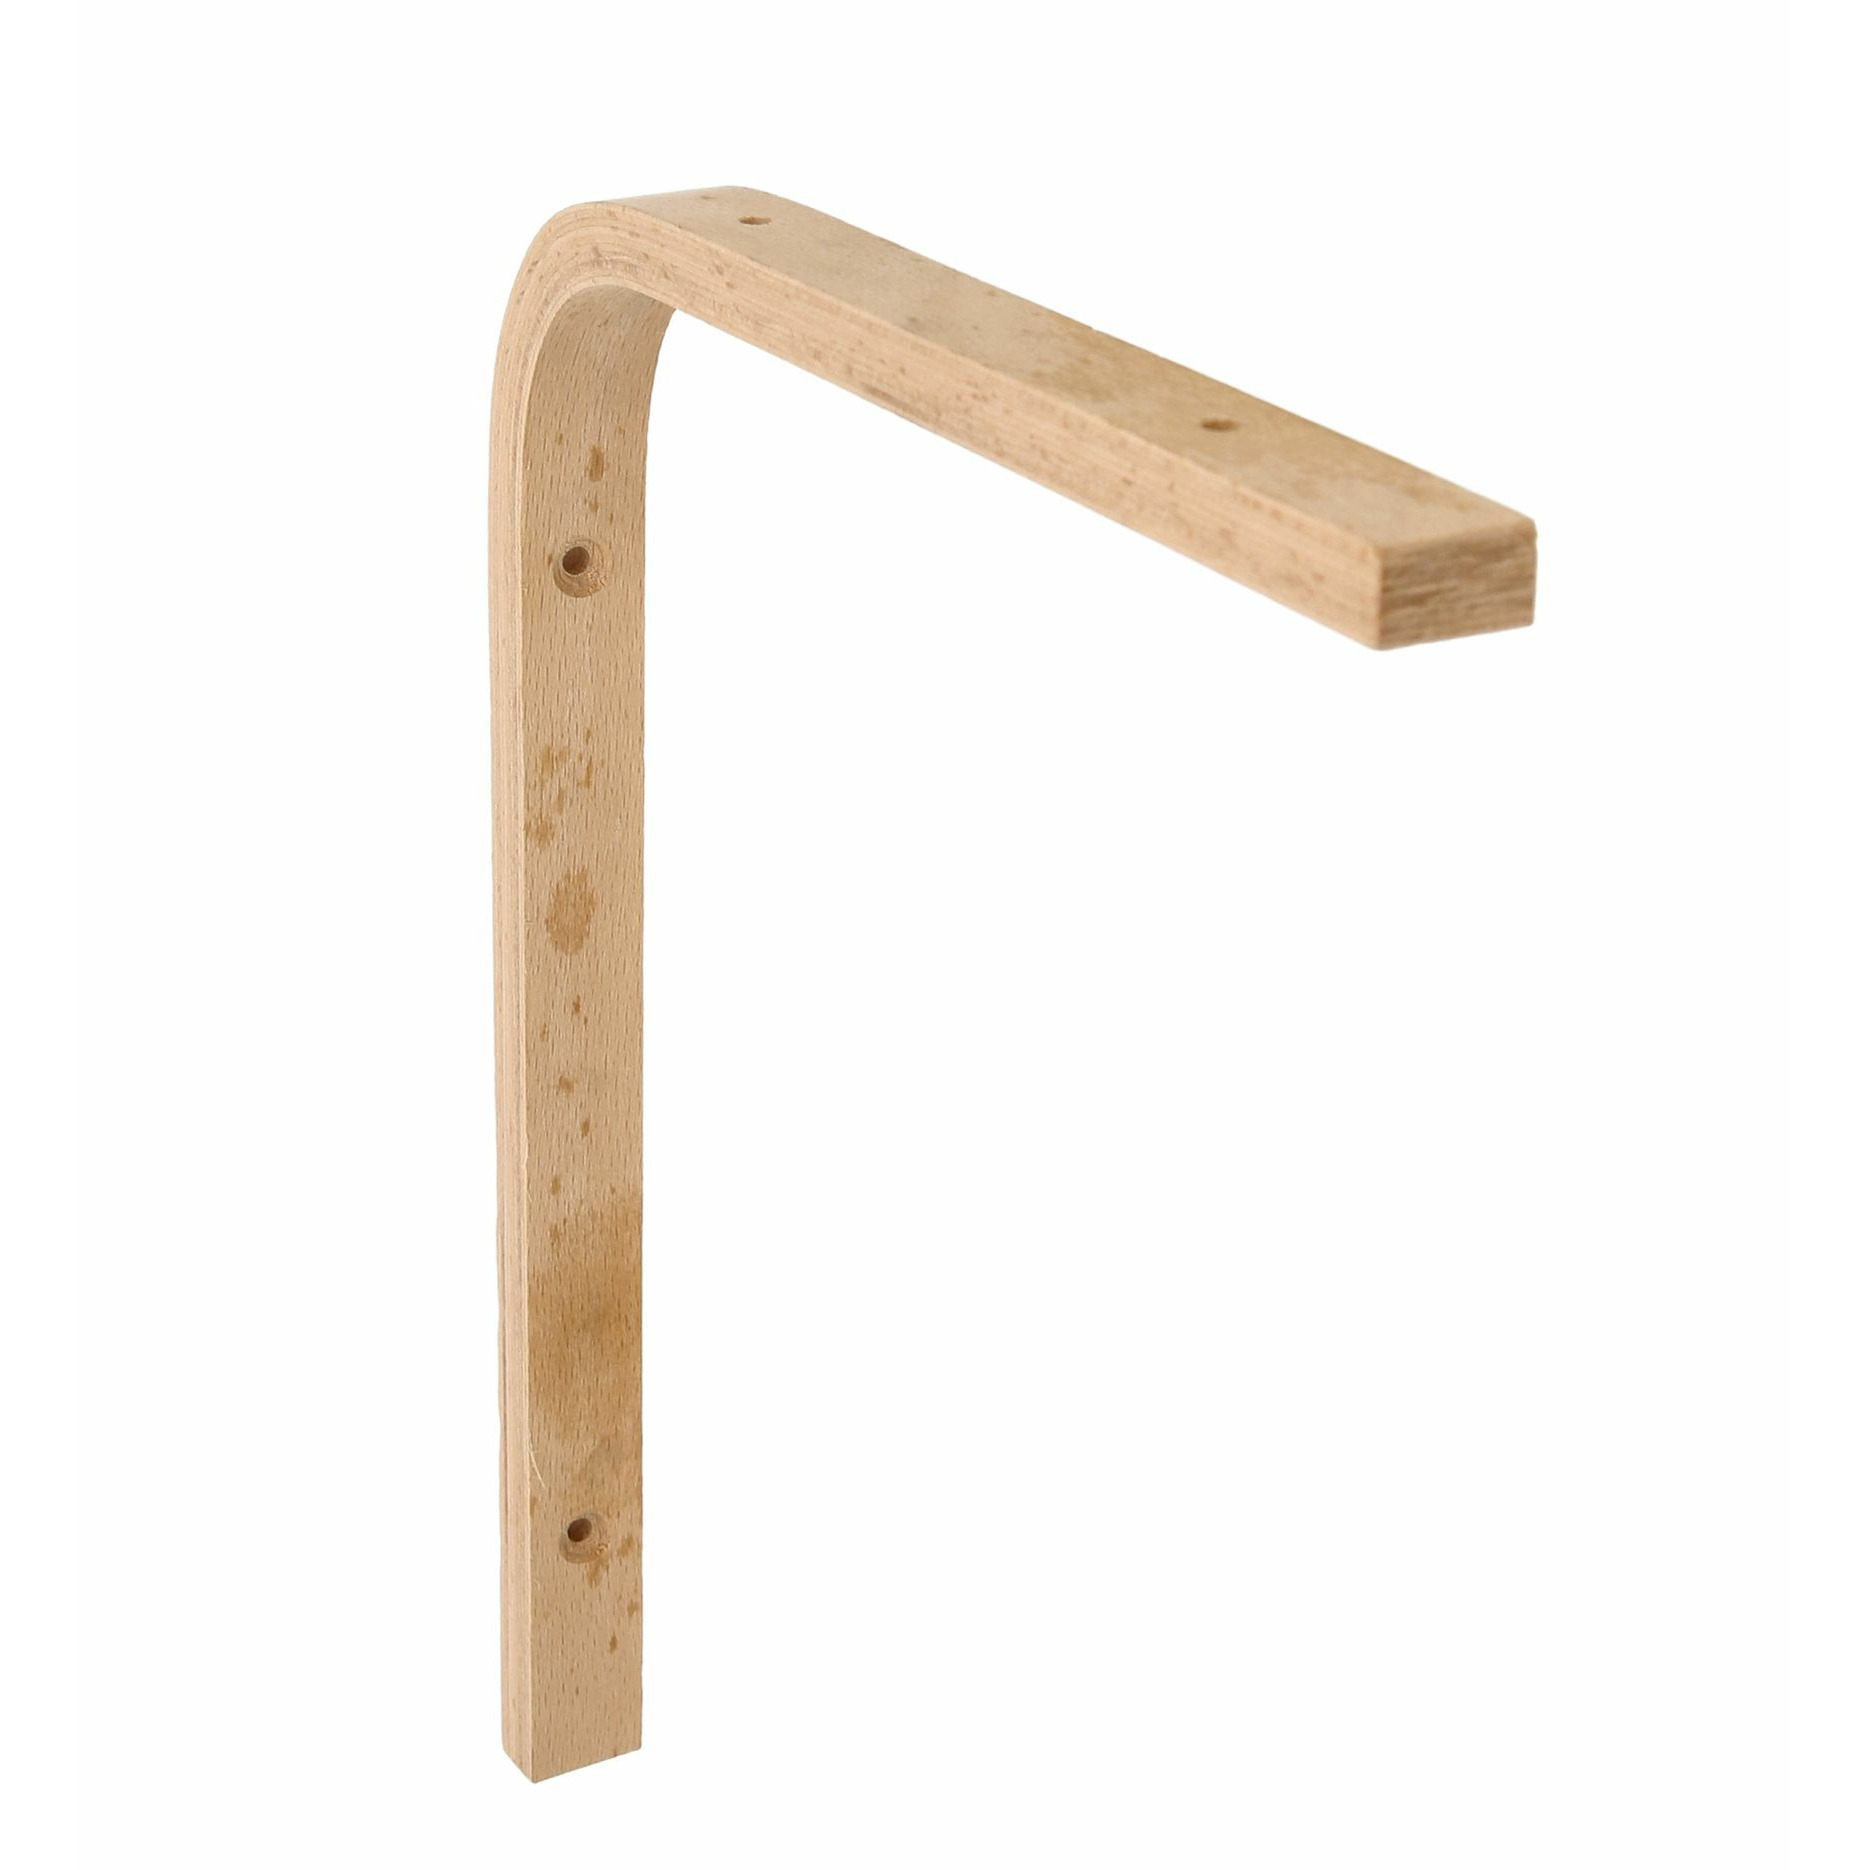 AMIG Plankdrager/planksteun van hout - lichtbruin - H250 x B100 mm -